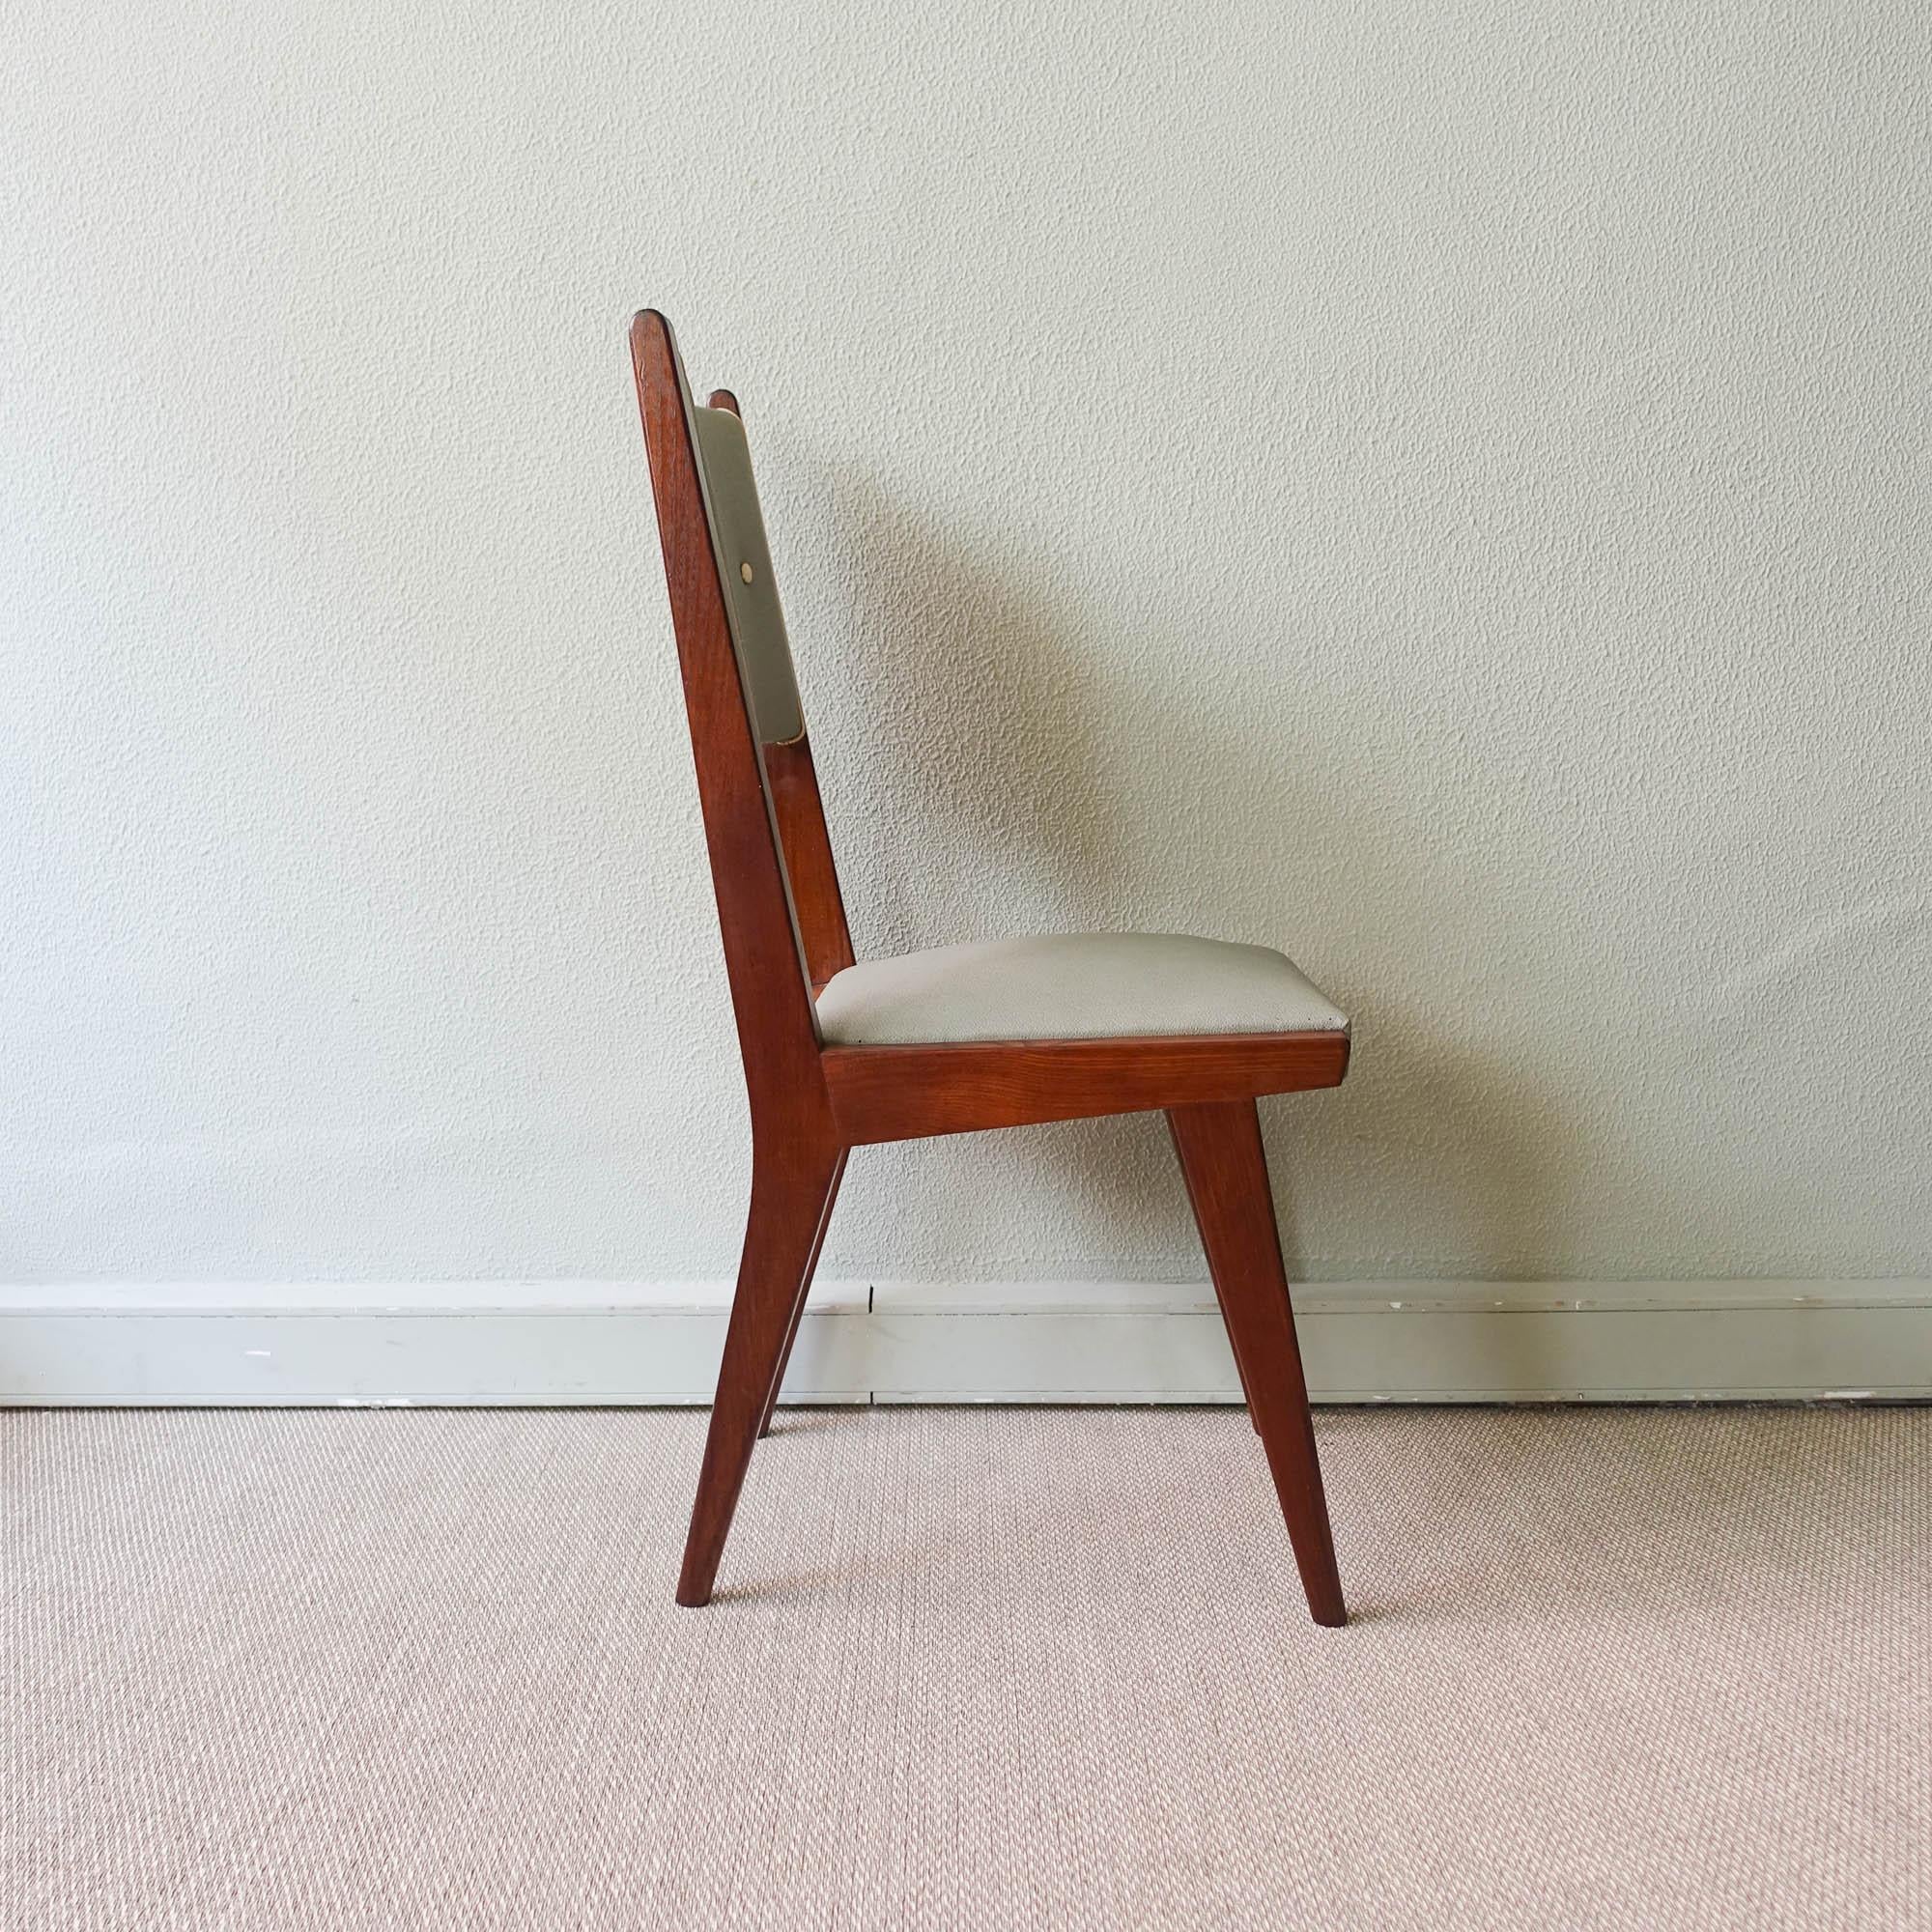 Portuguese Chair, Model 